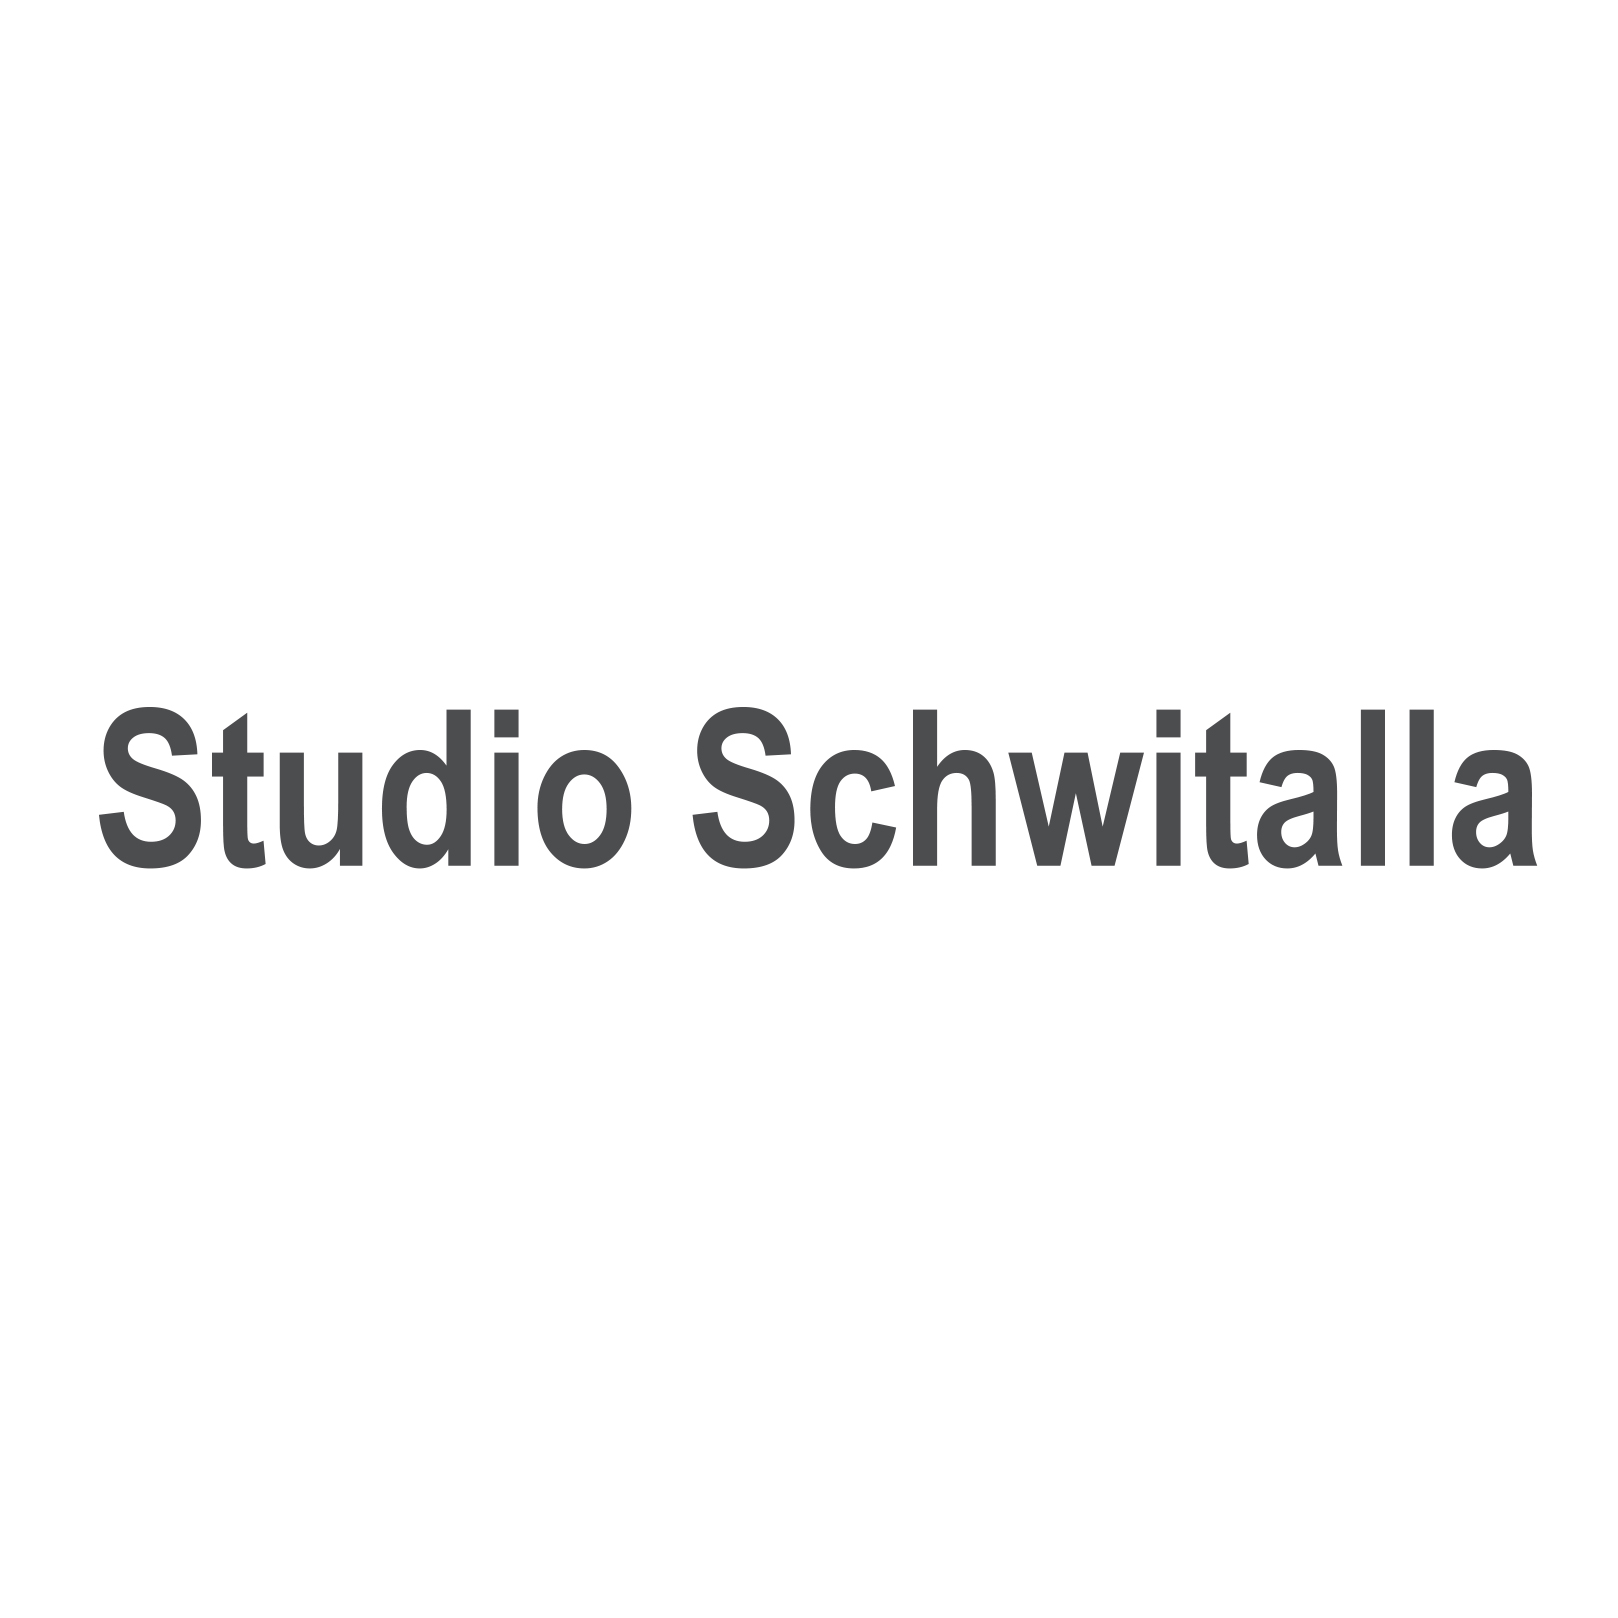 Studio Schwitalla – Fulldome Industry Organization